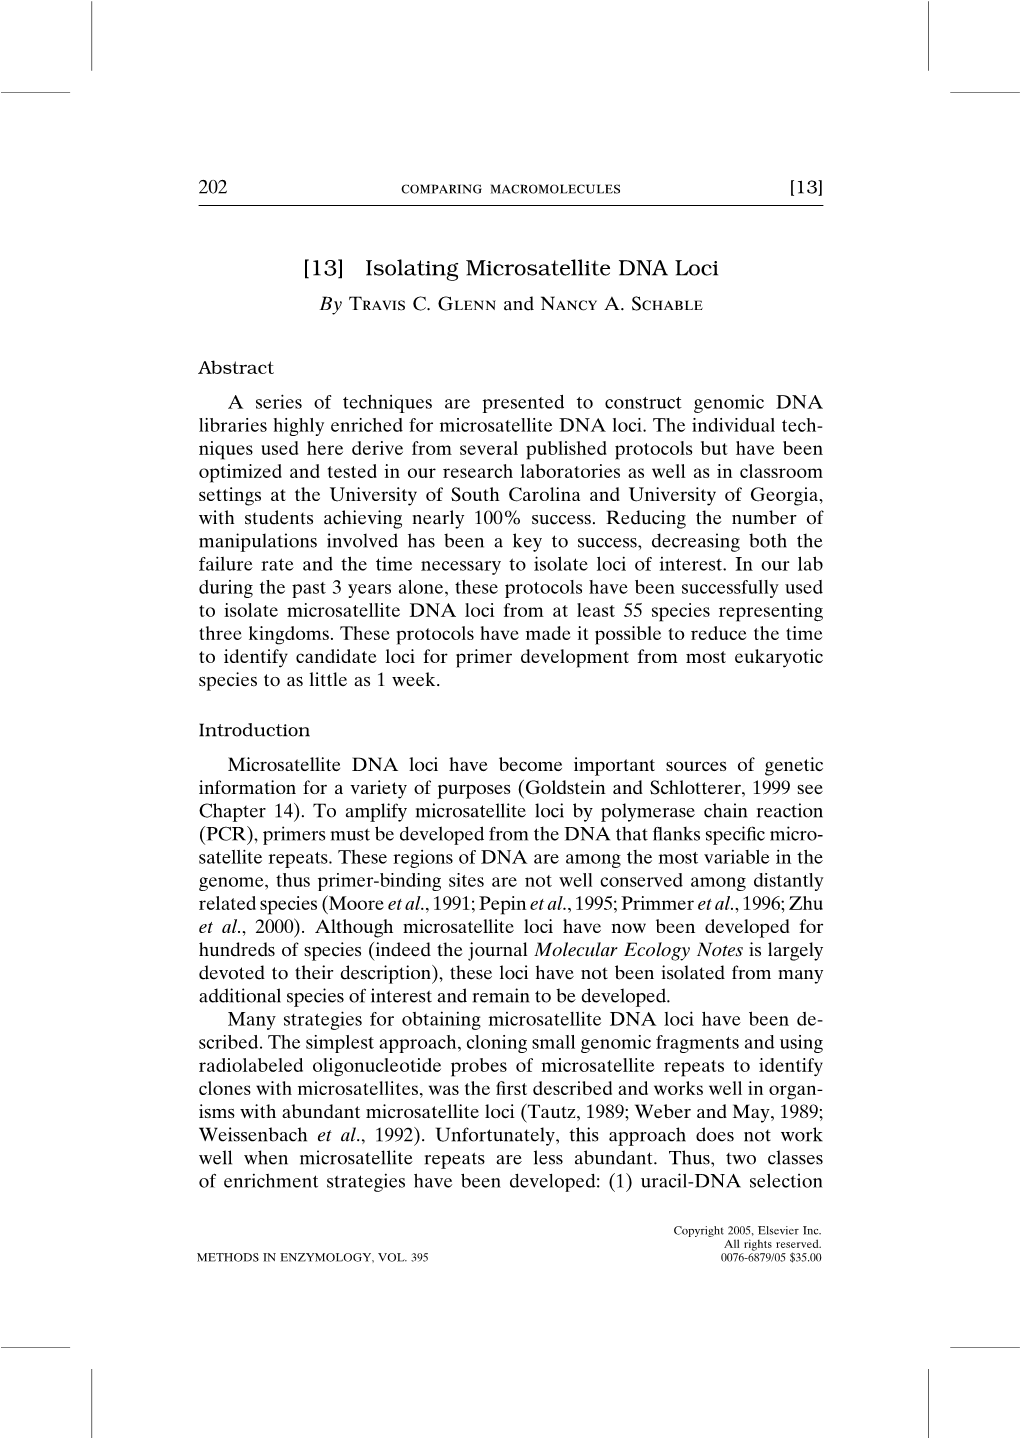 [13] Isolating Microsatellite DNA Loci by Travis C